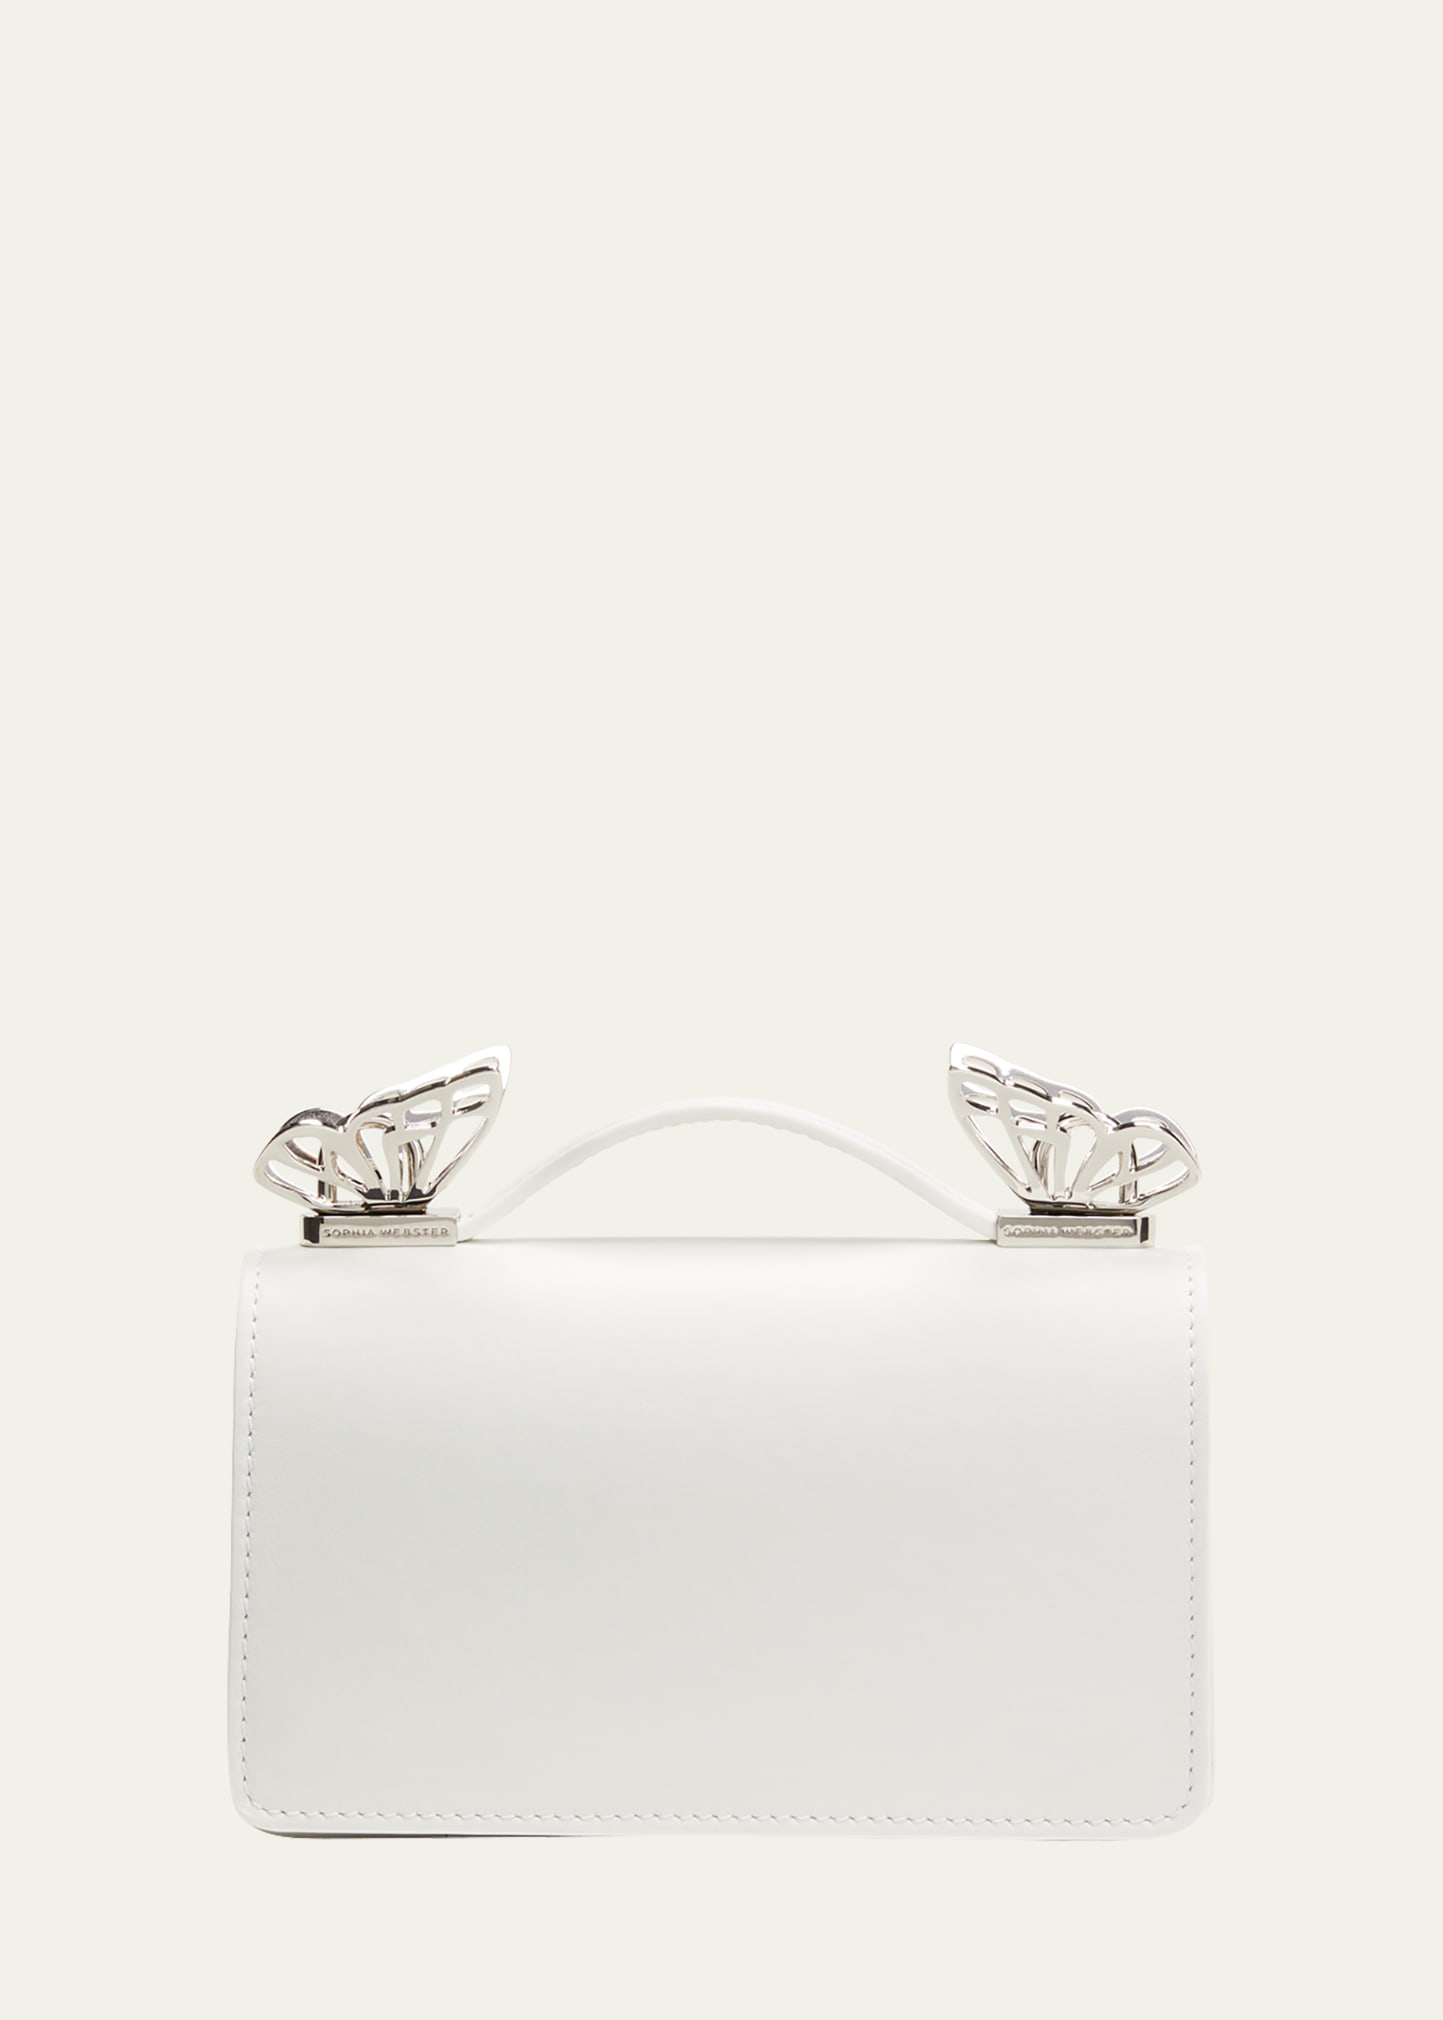 Sophia Webster Mariposa Mini Leather Shoulder Bag In White/silver